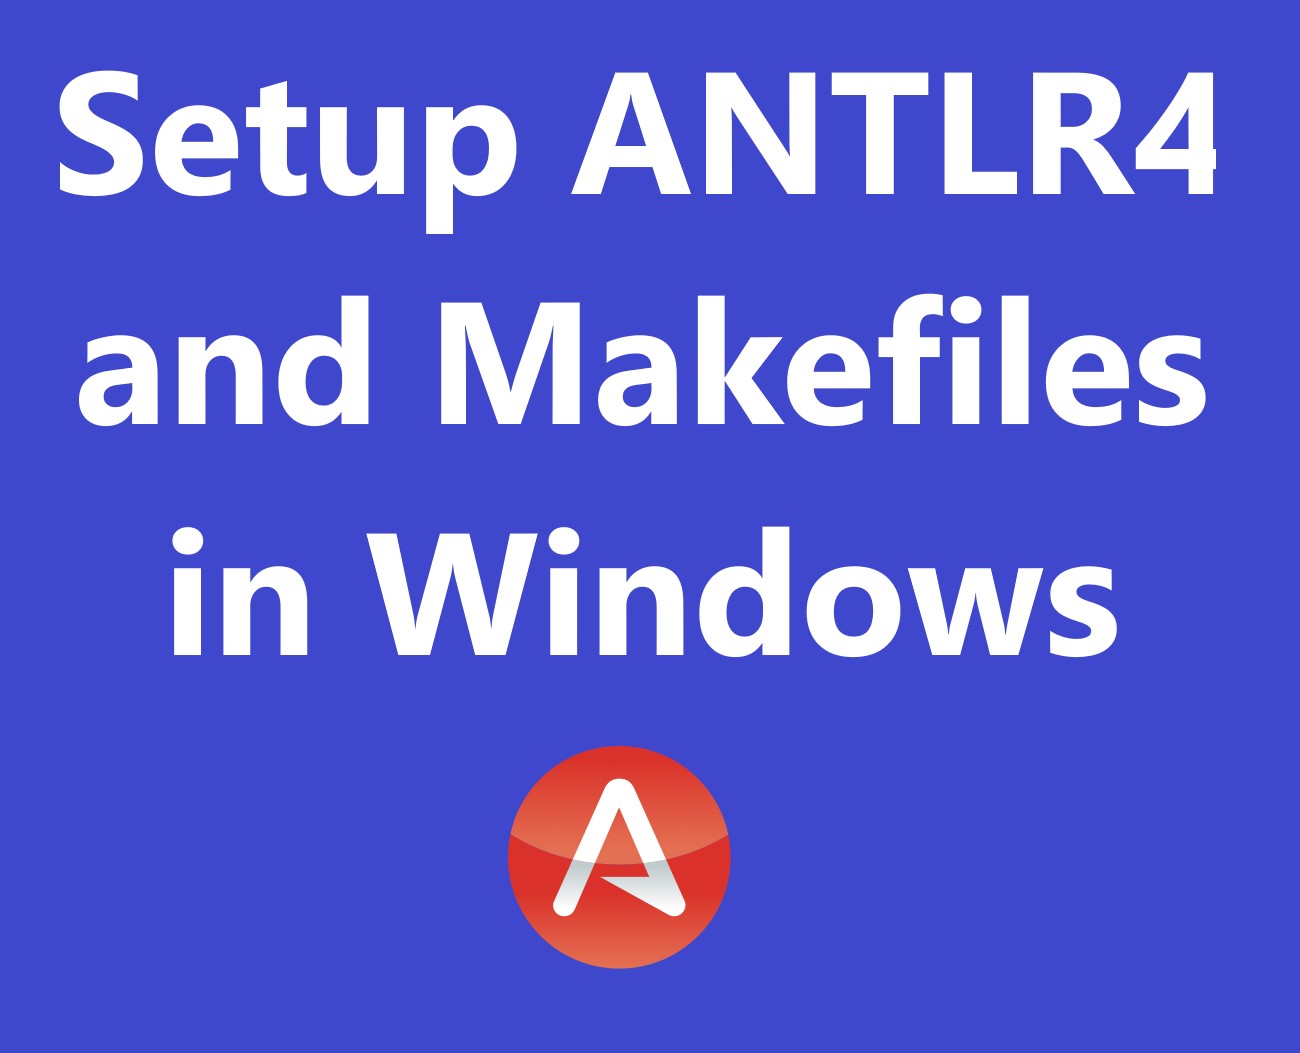 Setup ANTLR4 and Makefiles in Windows